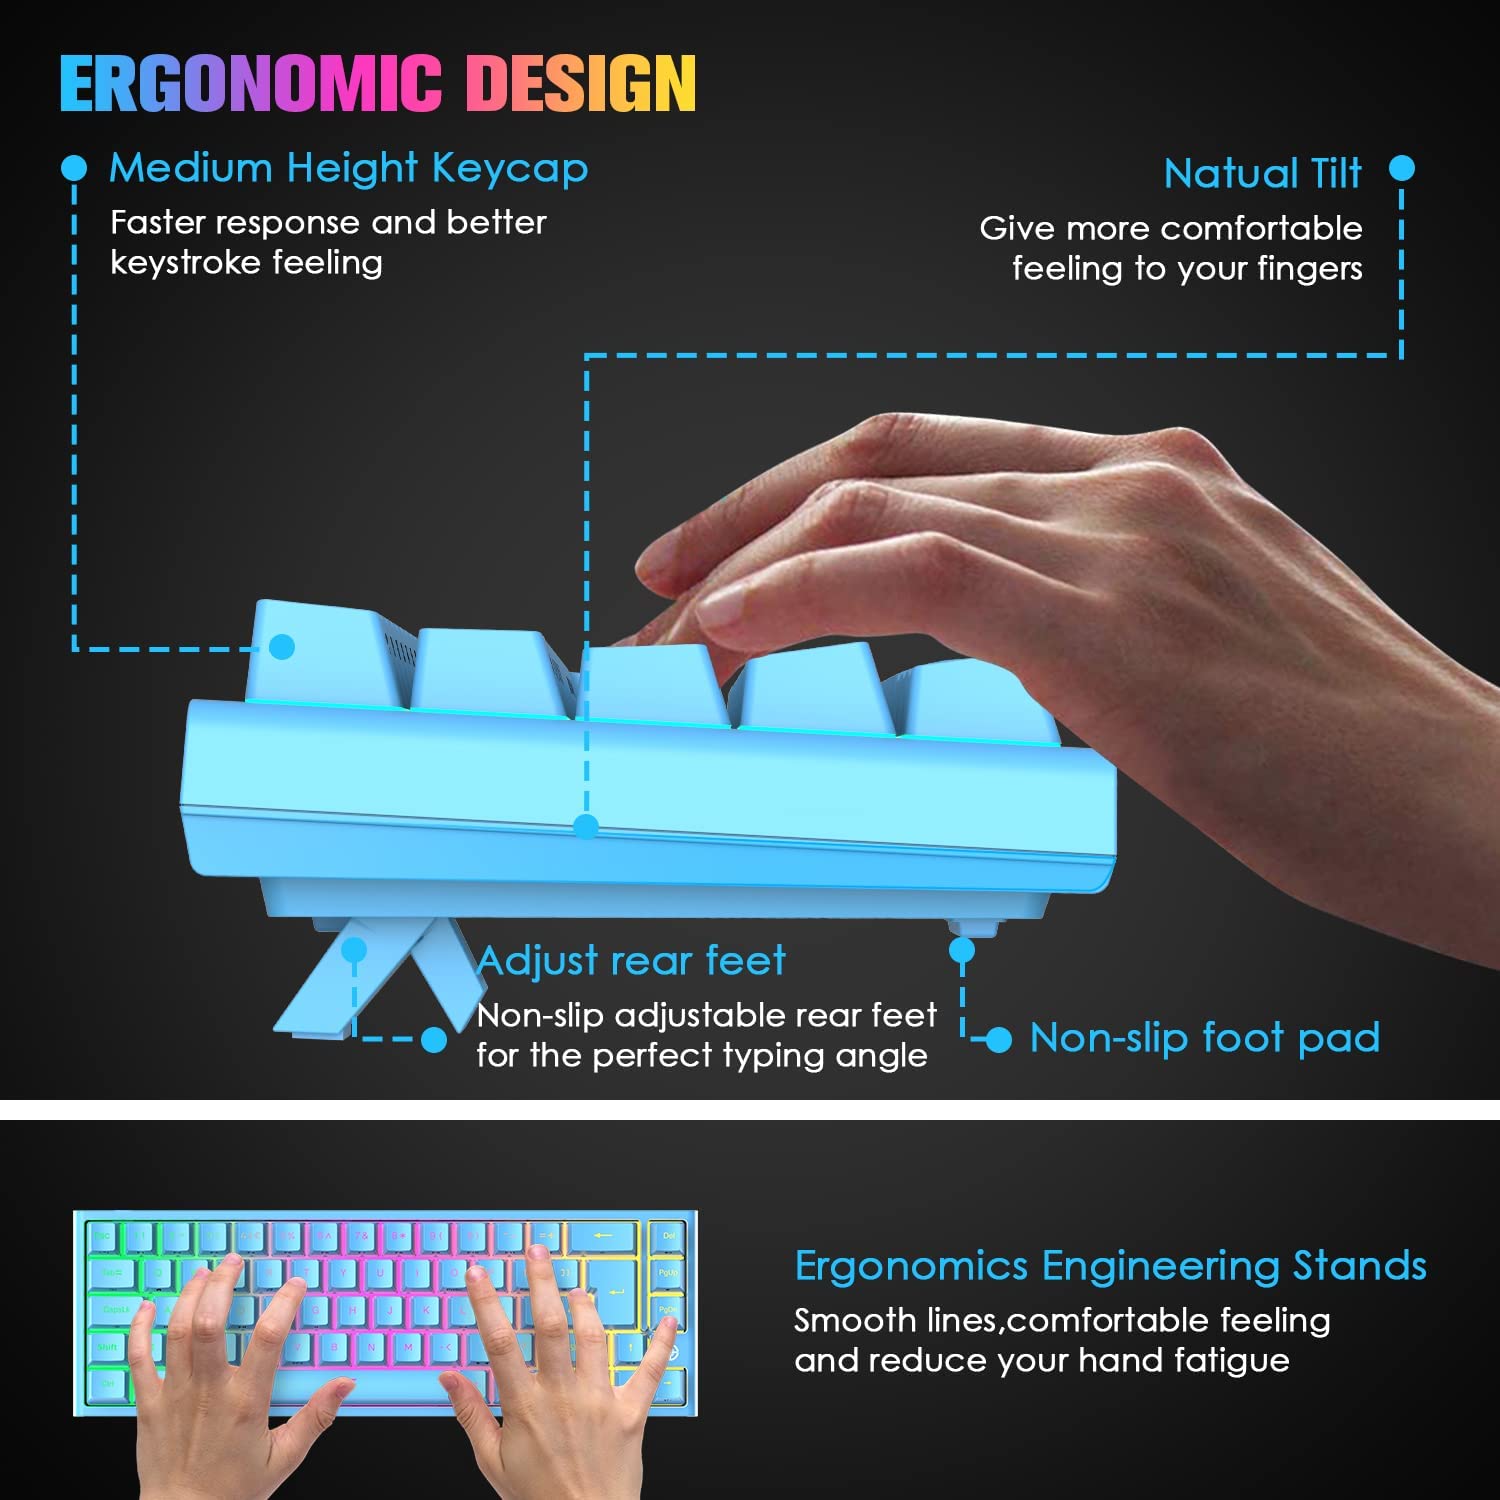 MAGIC-REFINER MK26 60% Gaming Keyboard,RGB Chroma Backlit Wried Ultra-Compact Mini Mechanical Keyboard 68 Key for PC, MAC, PS4